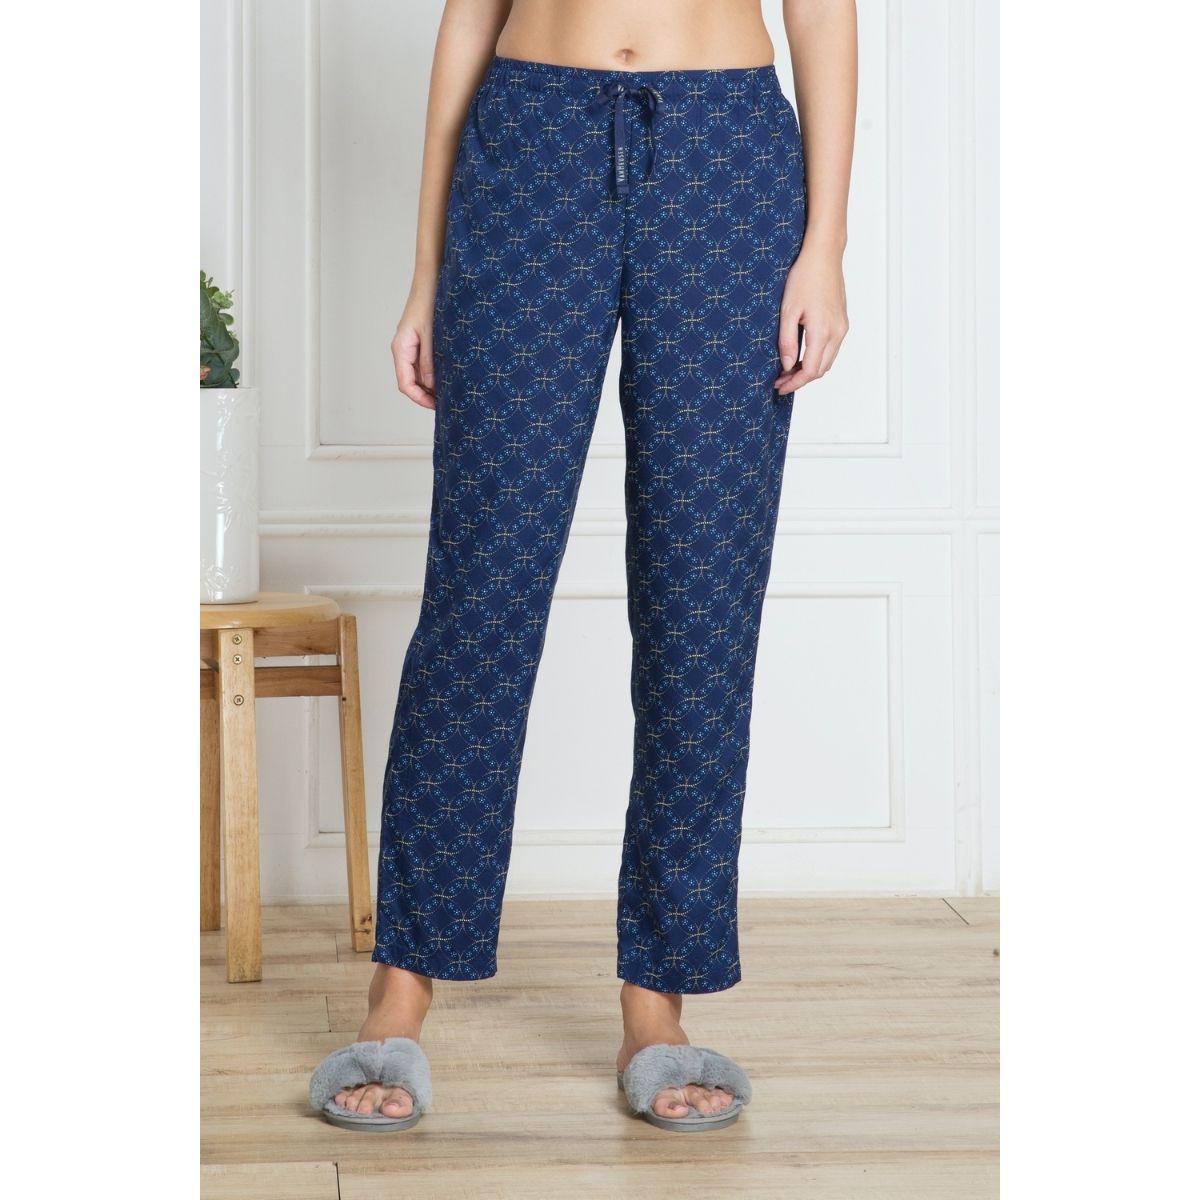 Buy Louis Vuitton Pajamas for Women Online In India -  India